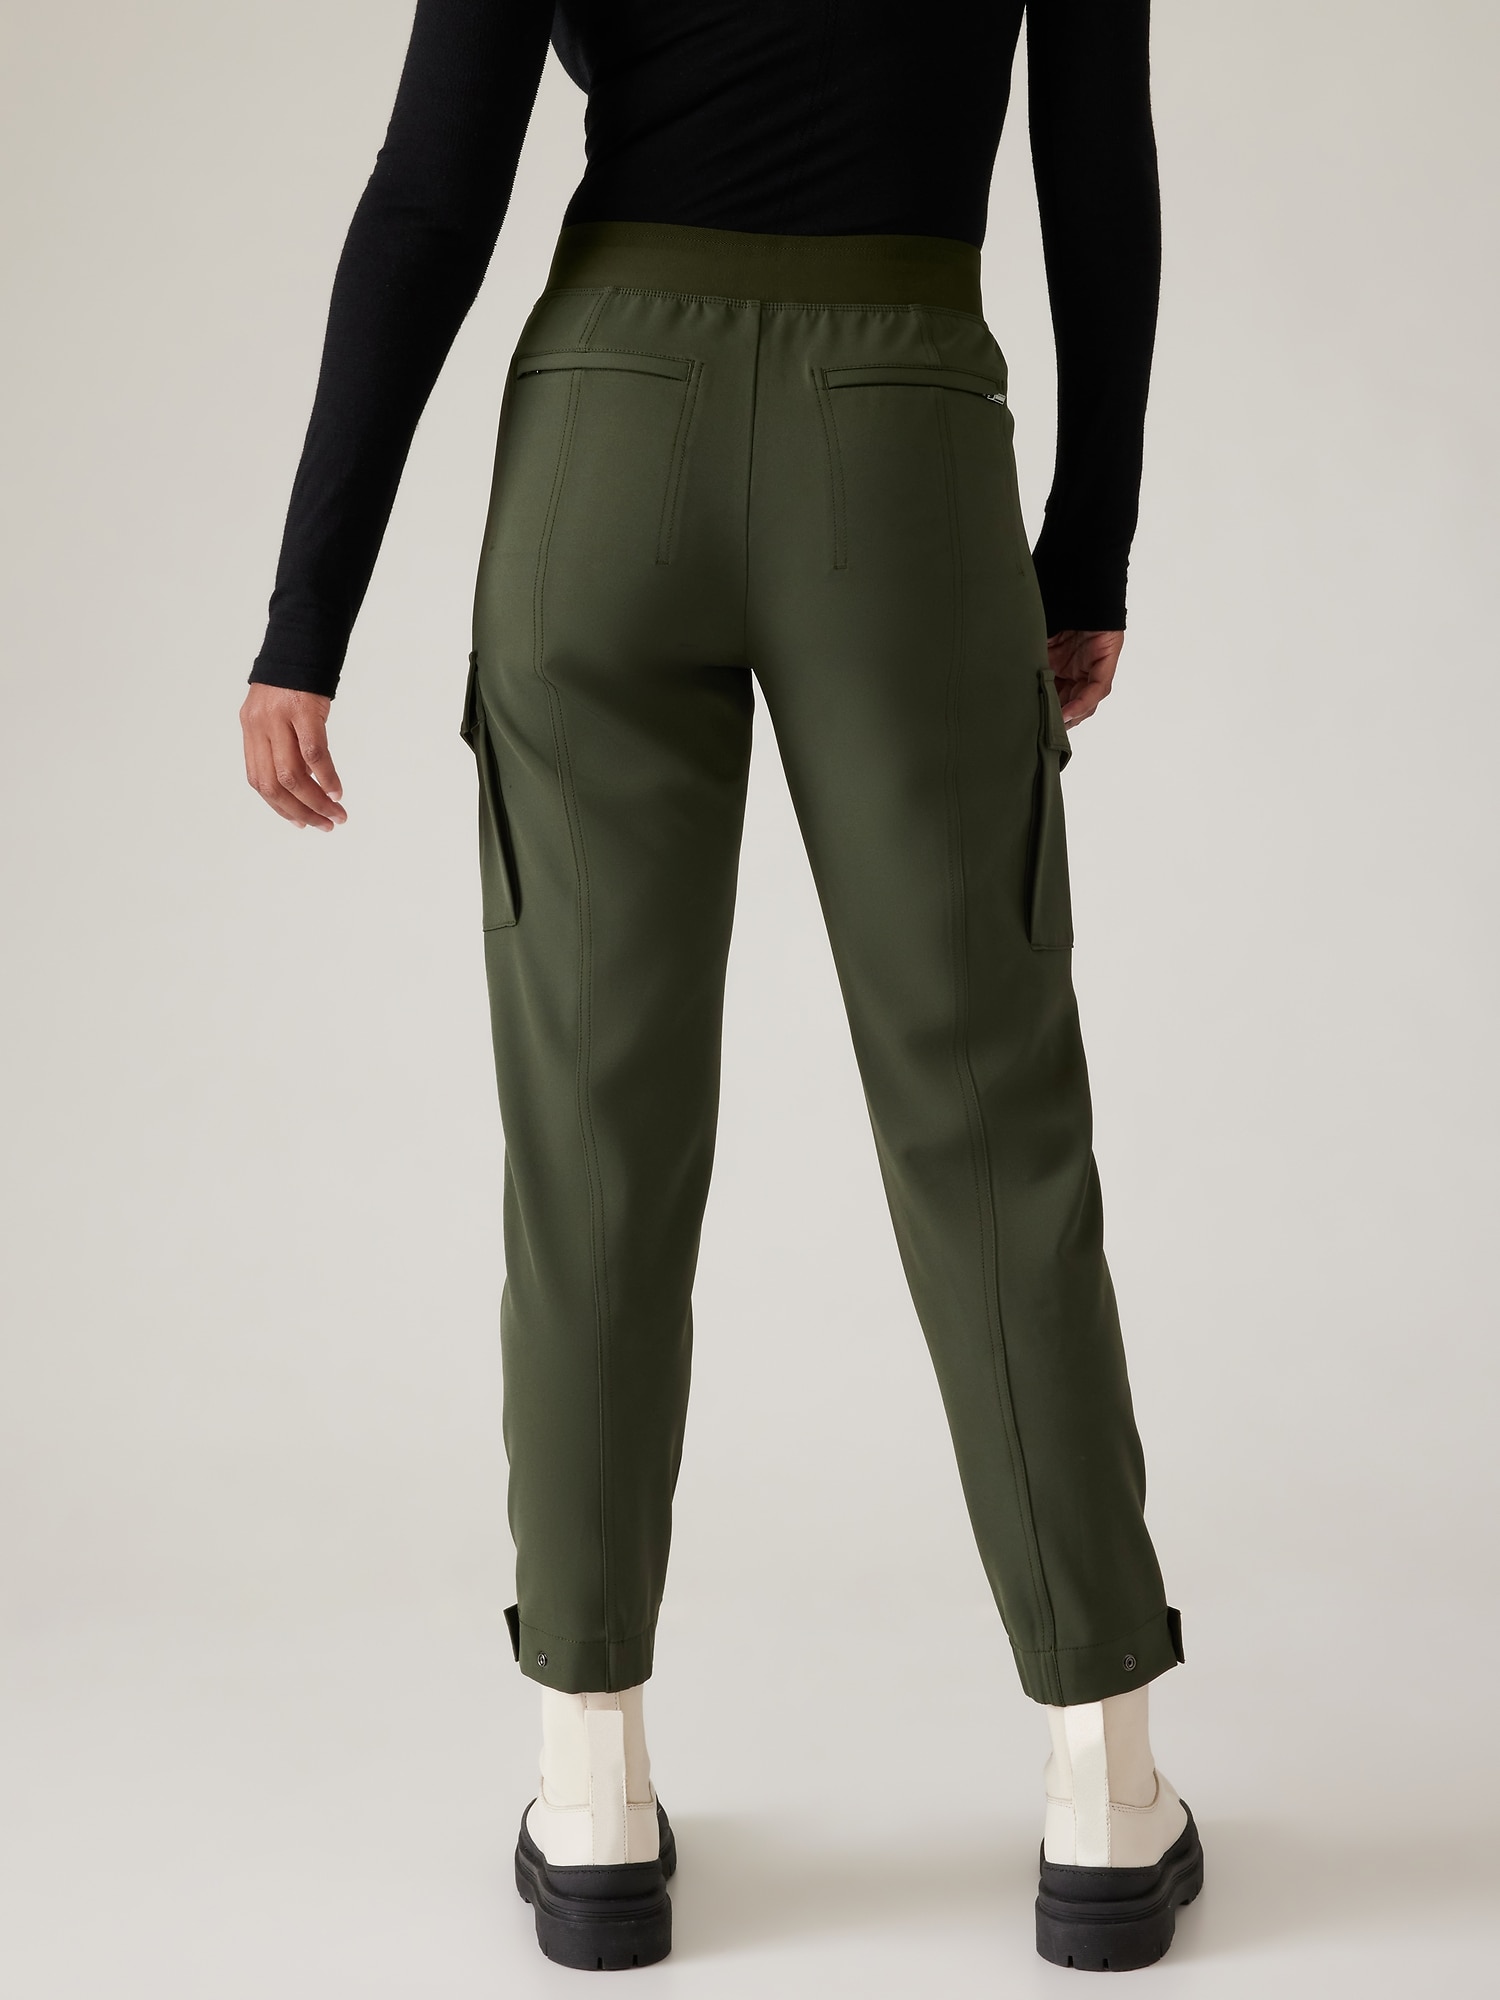 Athleta Olive Green Women's Pants With Zipper Pockets & Legs Size 2